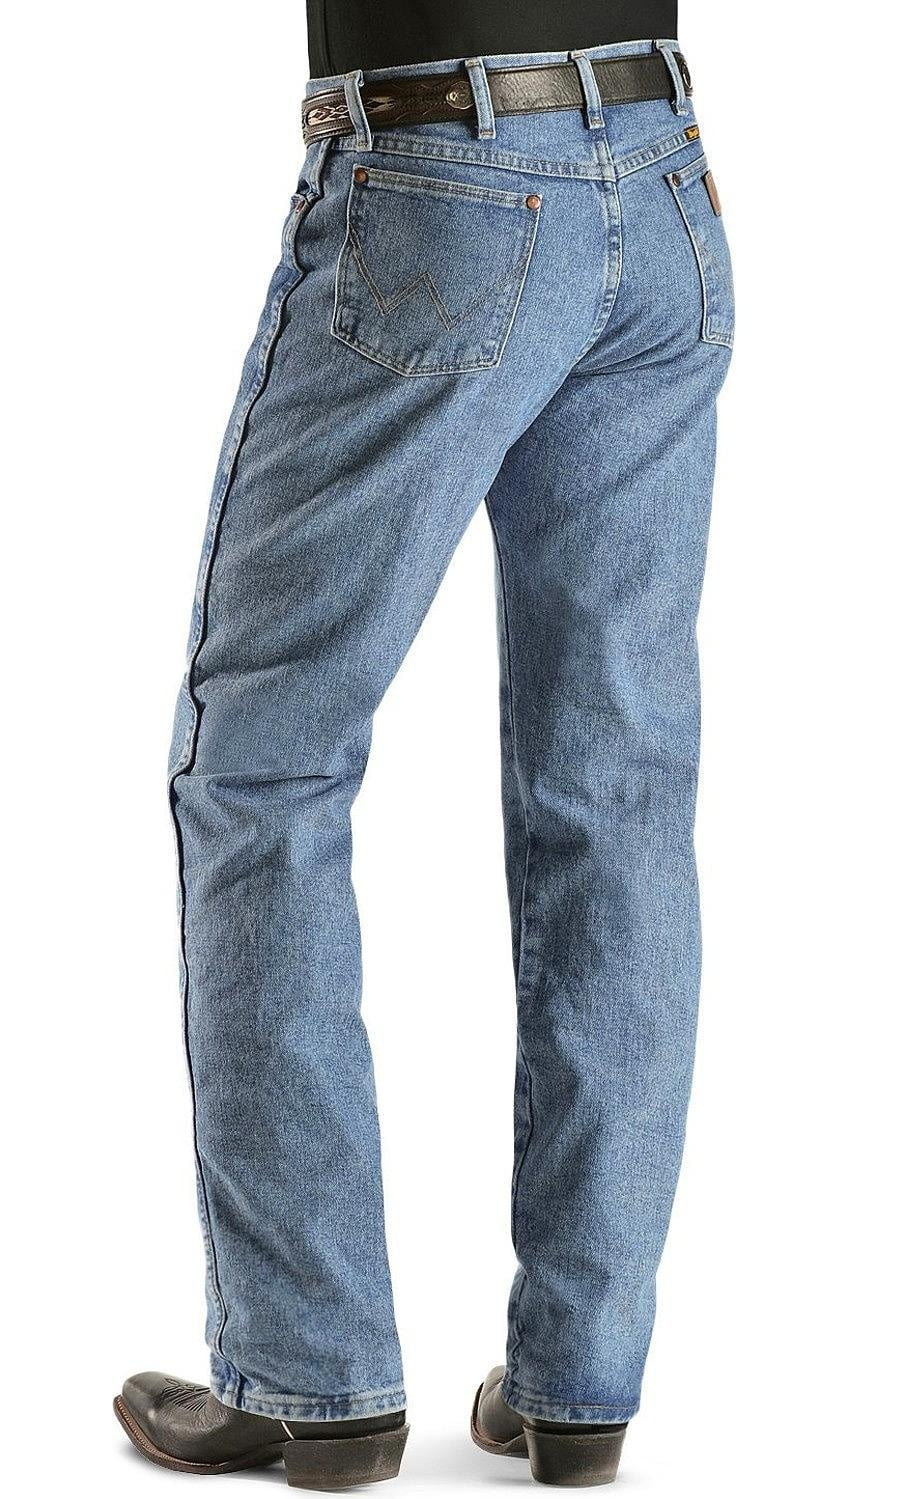 Wrangler - wrangler cowboy cut original fit jeans, antique wash, w36 ...